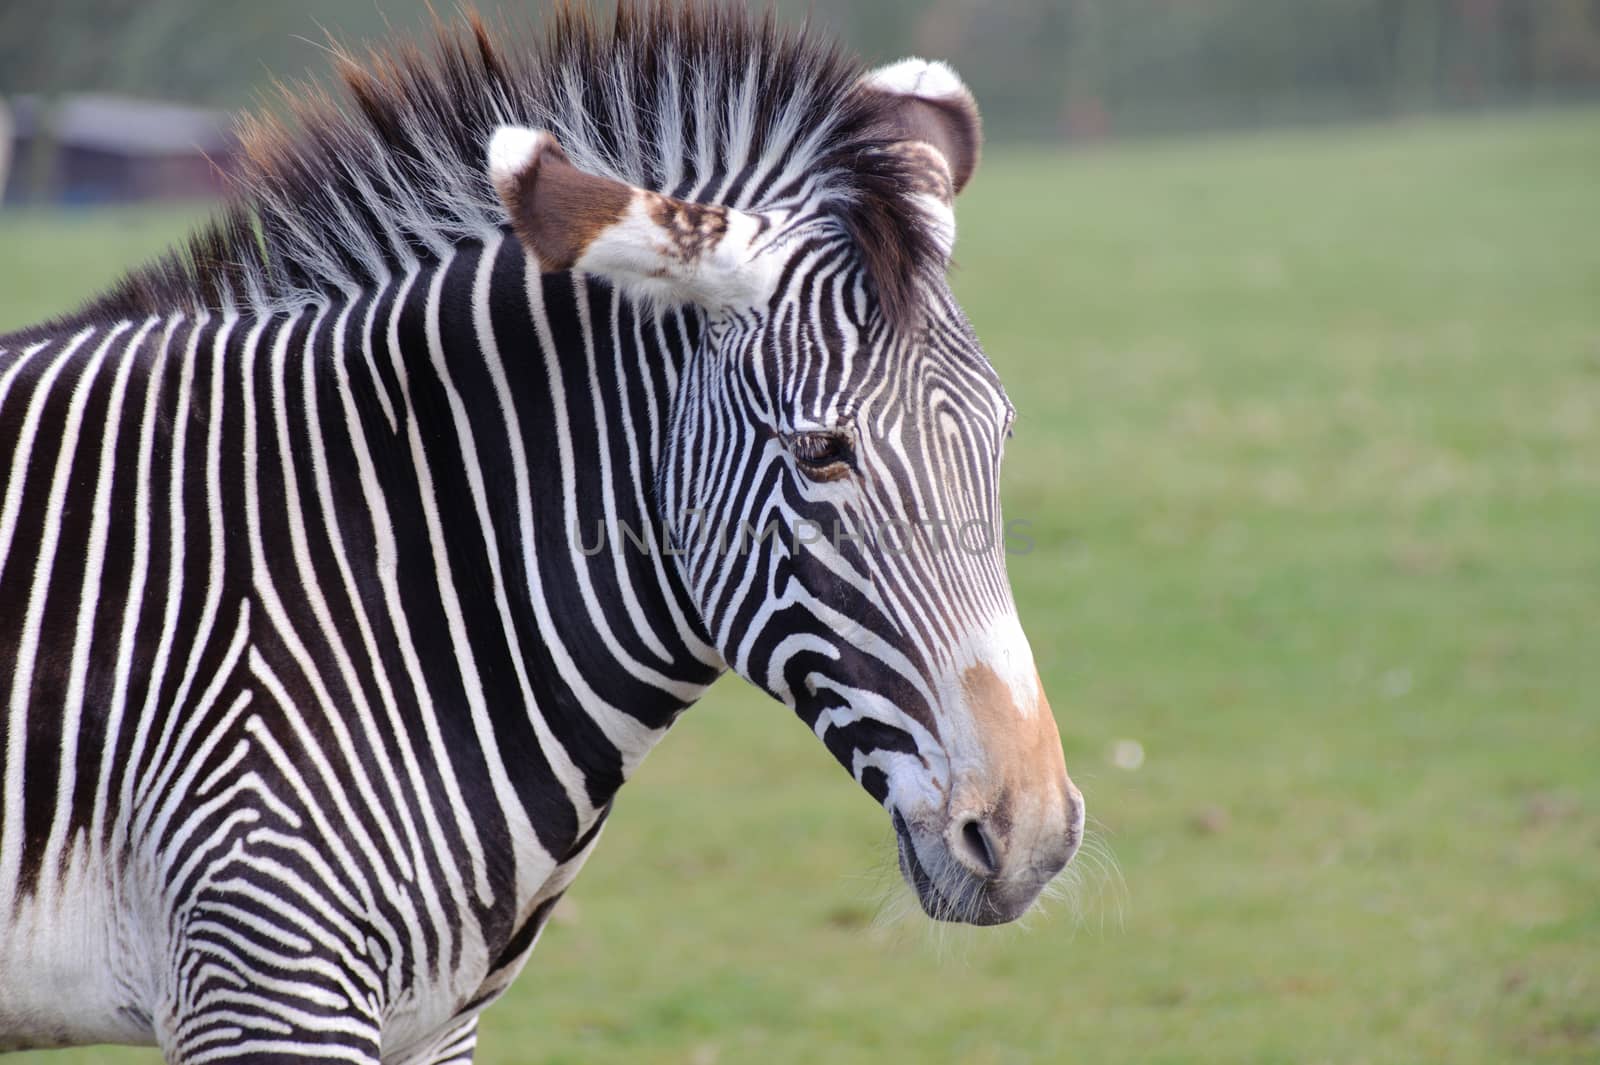 Zebra on grass close up